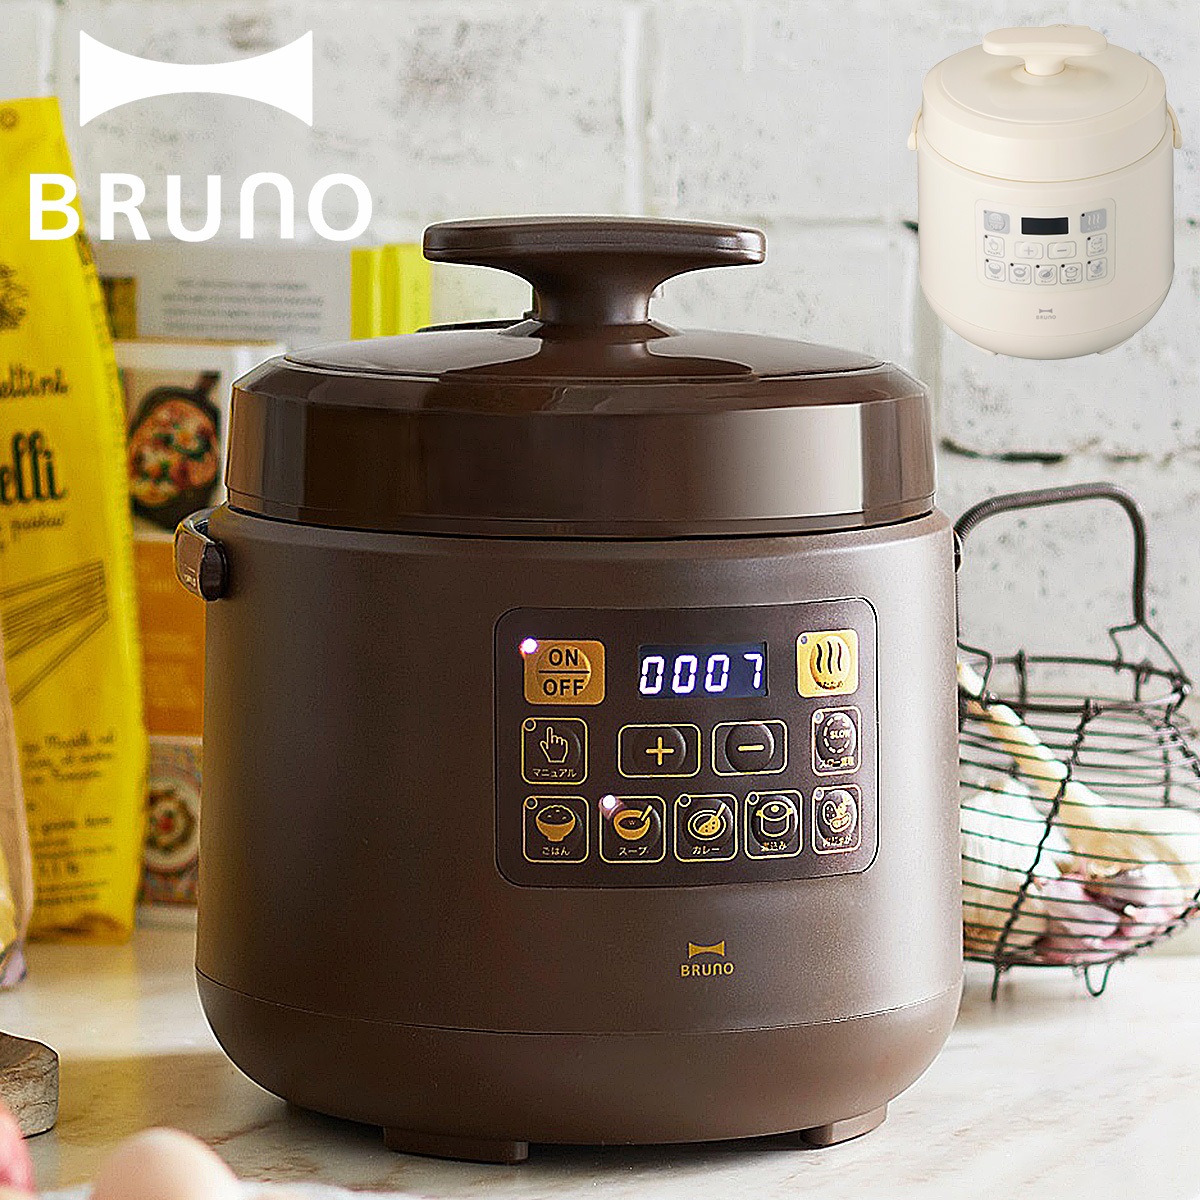 BRUNO ブルーノ 圧力鍋 なべ 電気 蒸し 3合 1.5L 炊飯器 電気鍋 